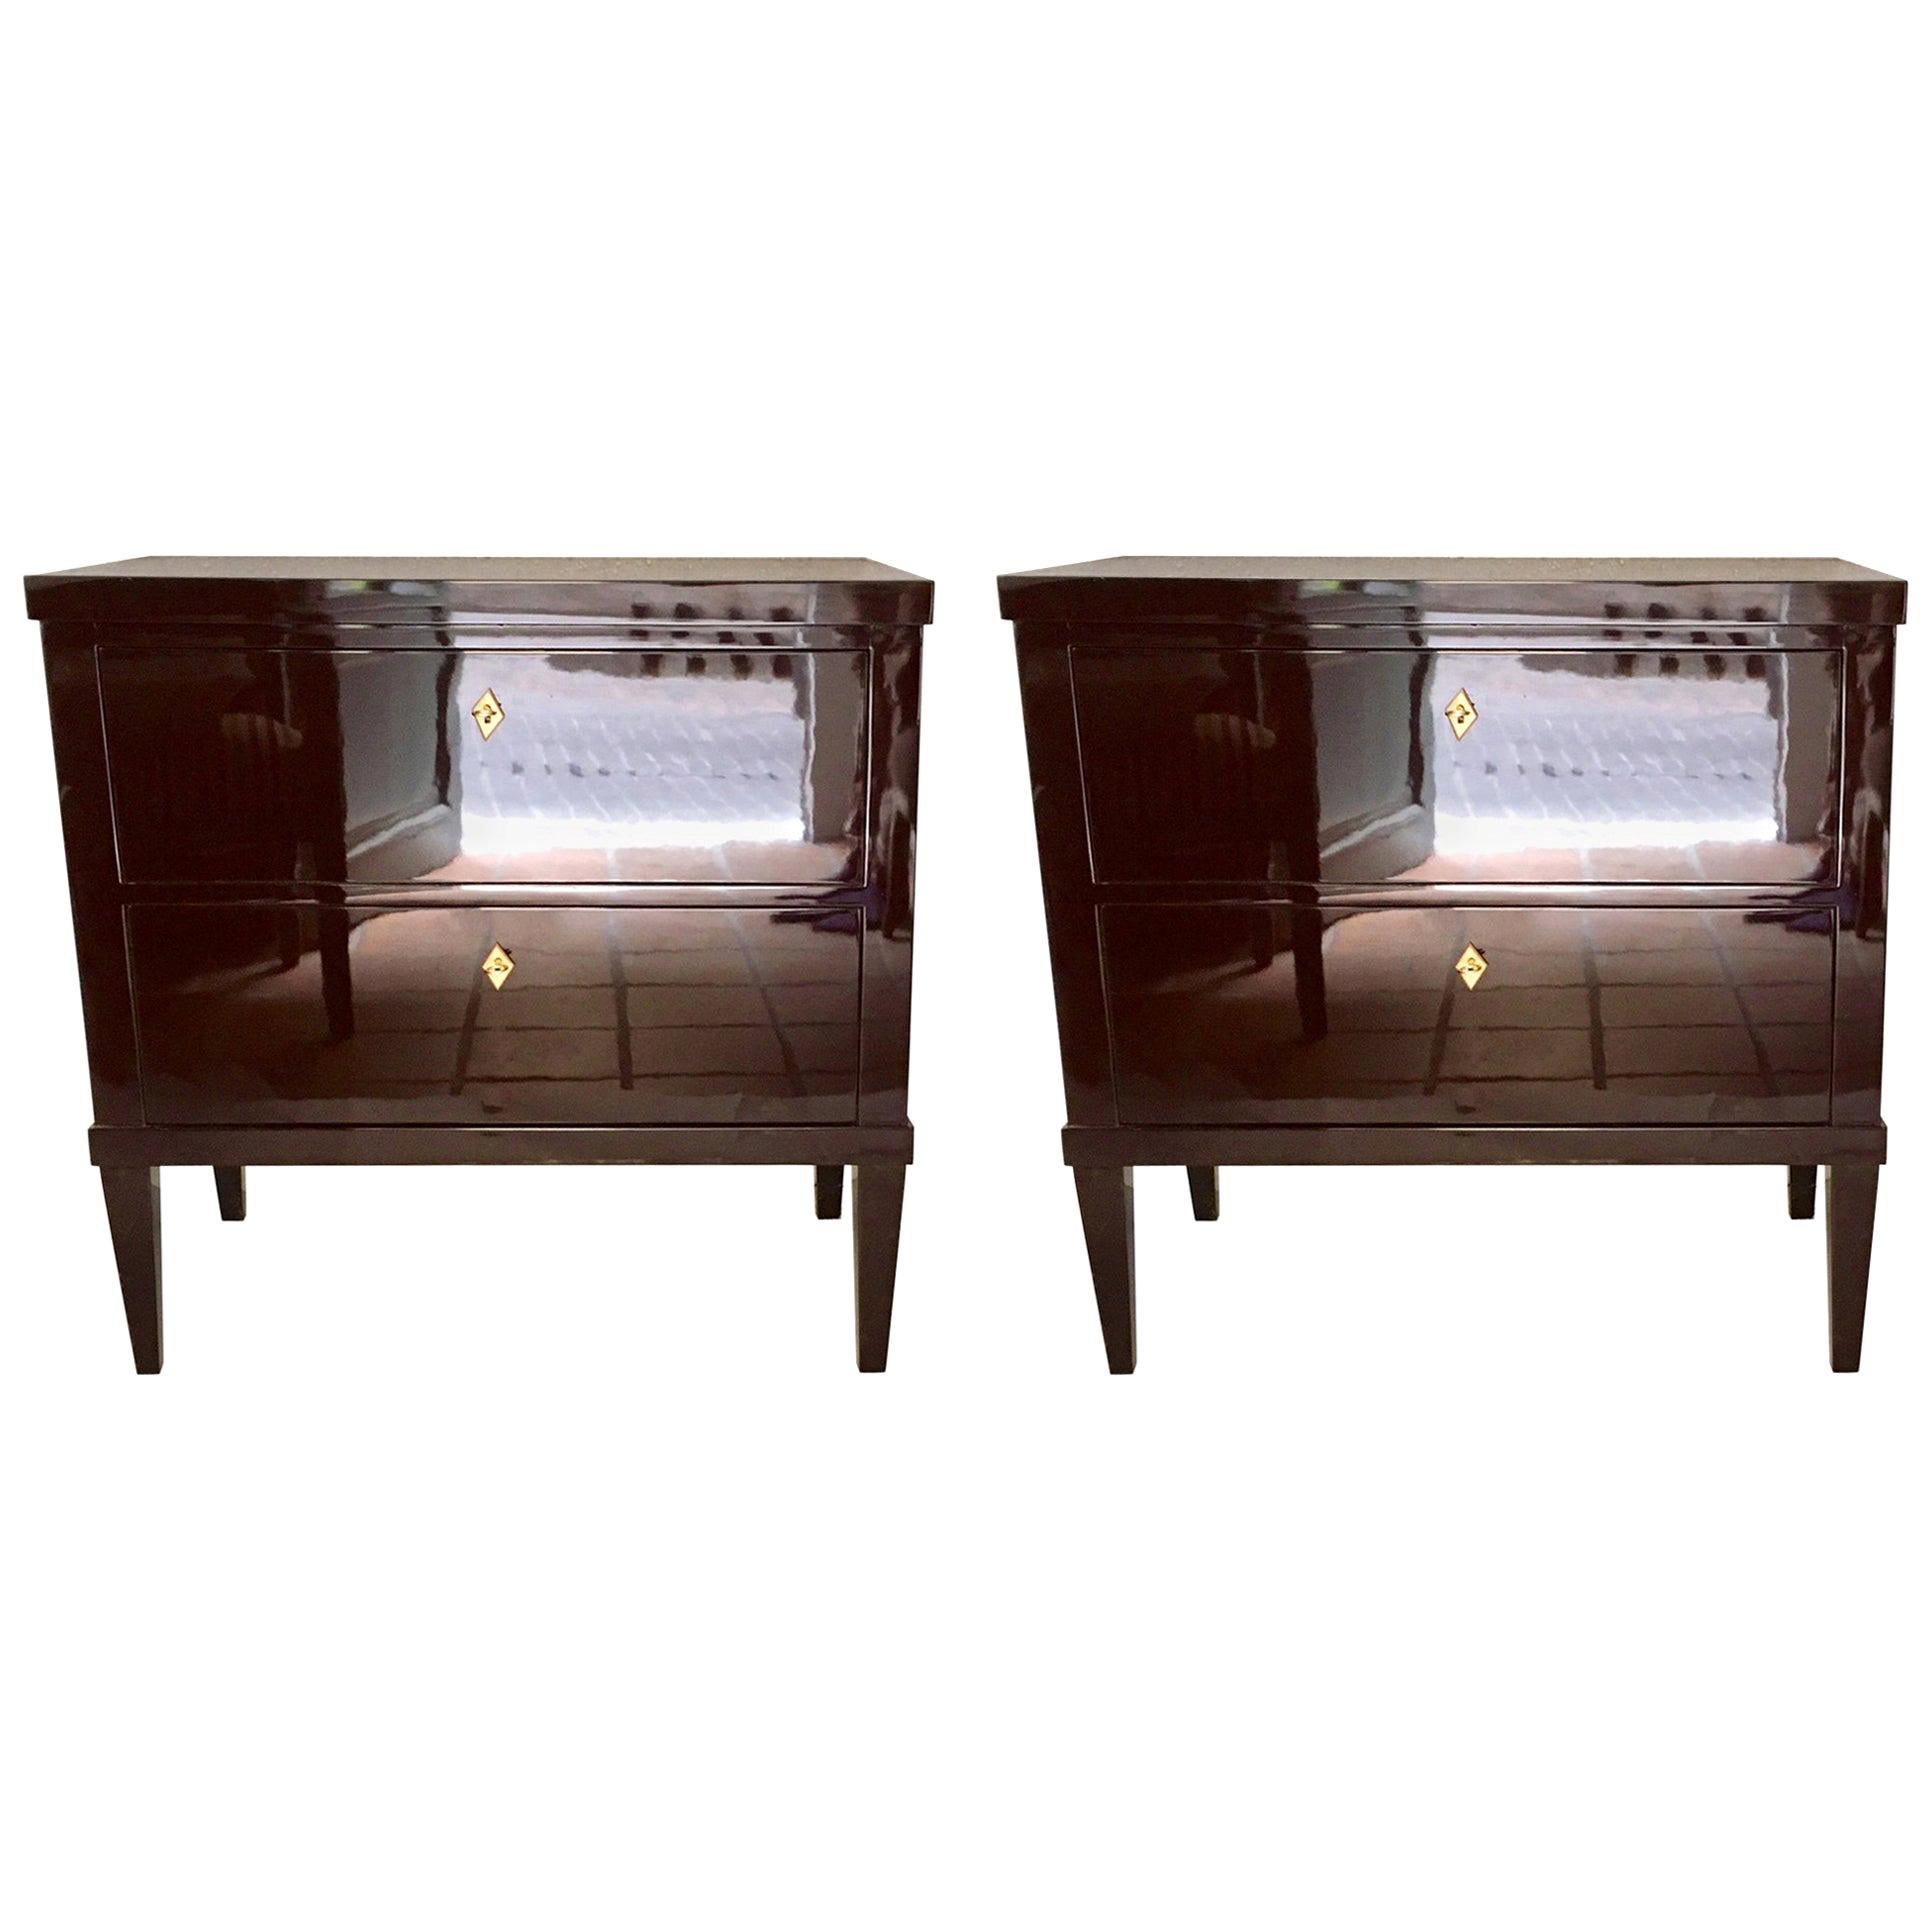 Pair of Garnet Lacquered Bierdemeier Style Commodes or Nightstands